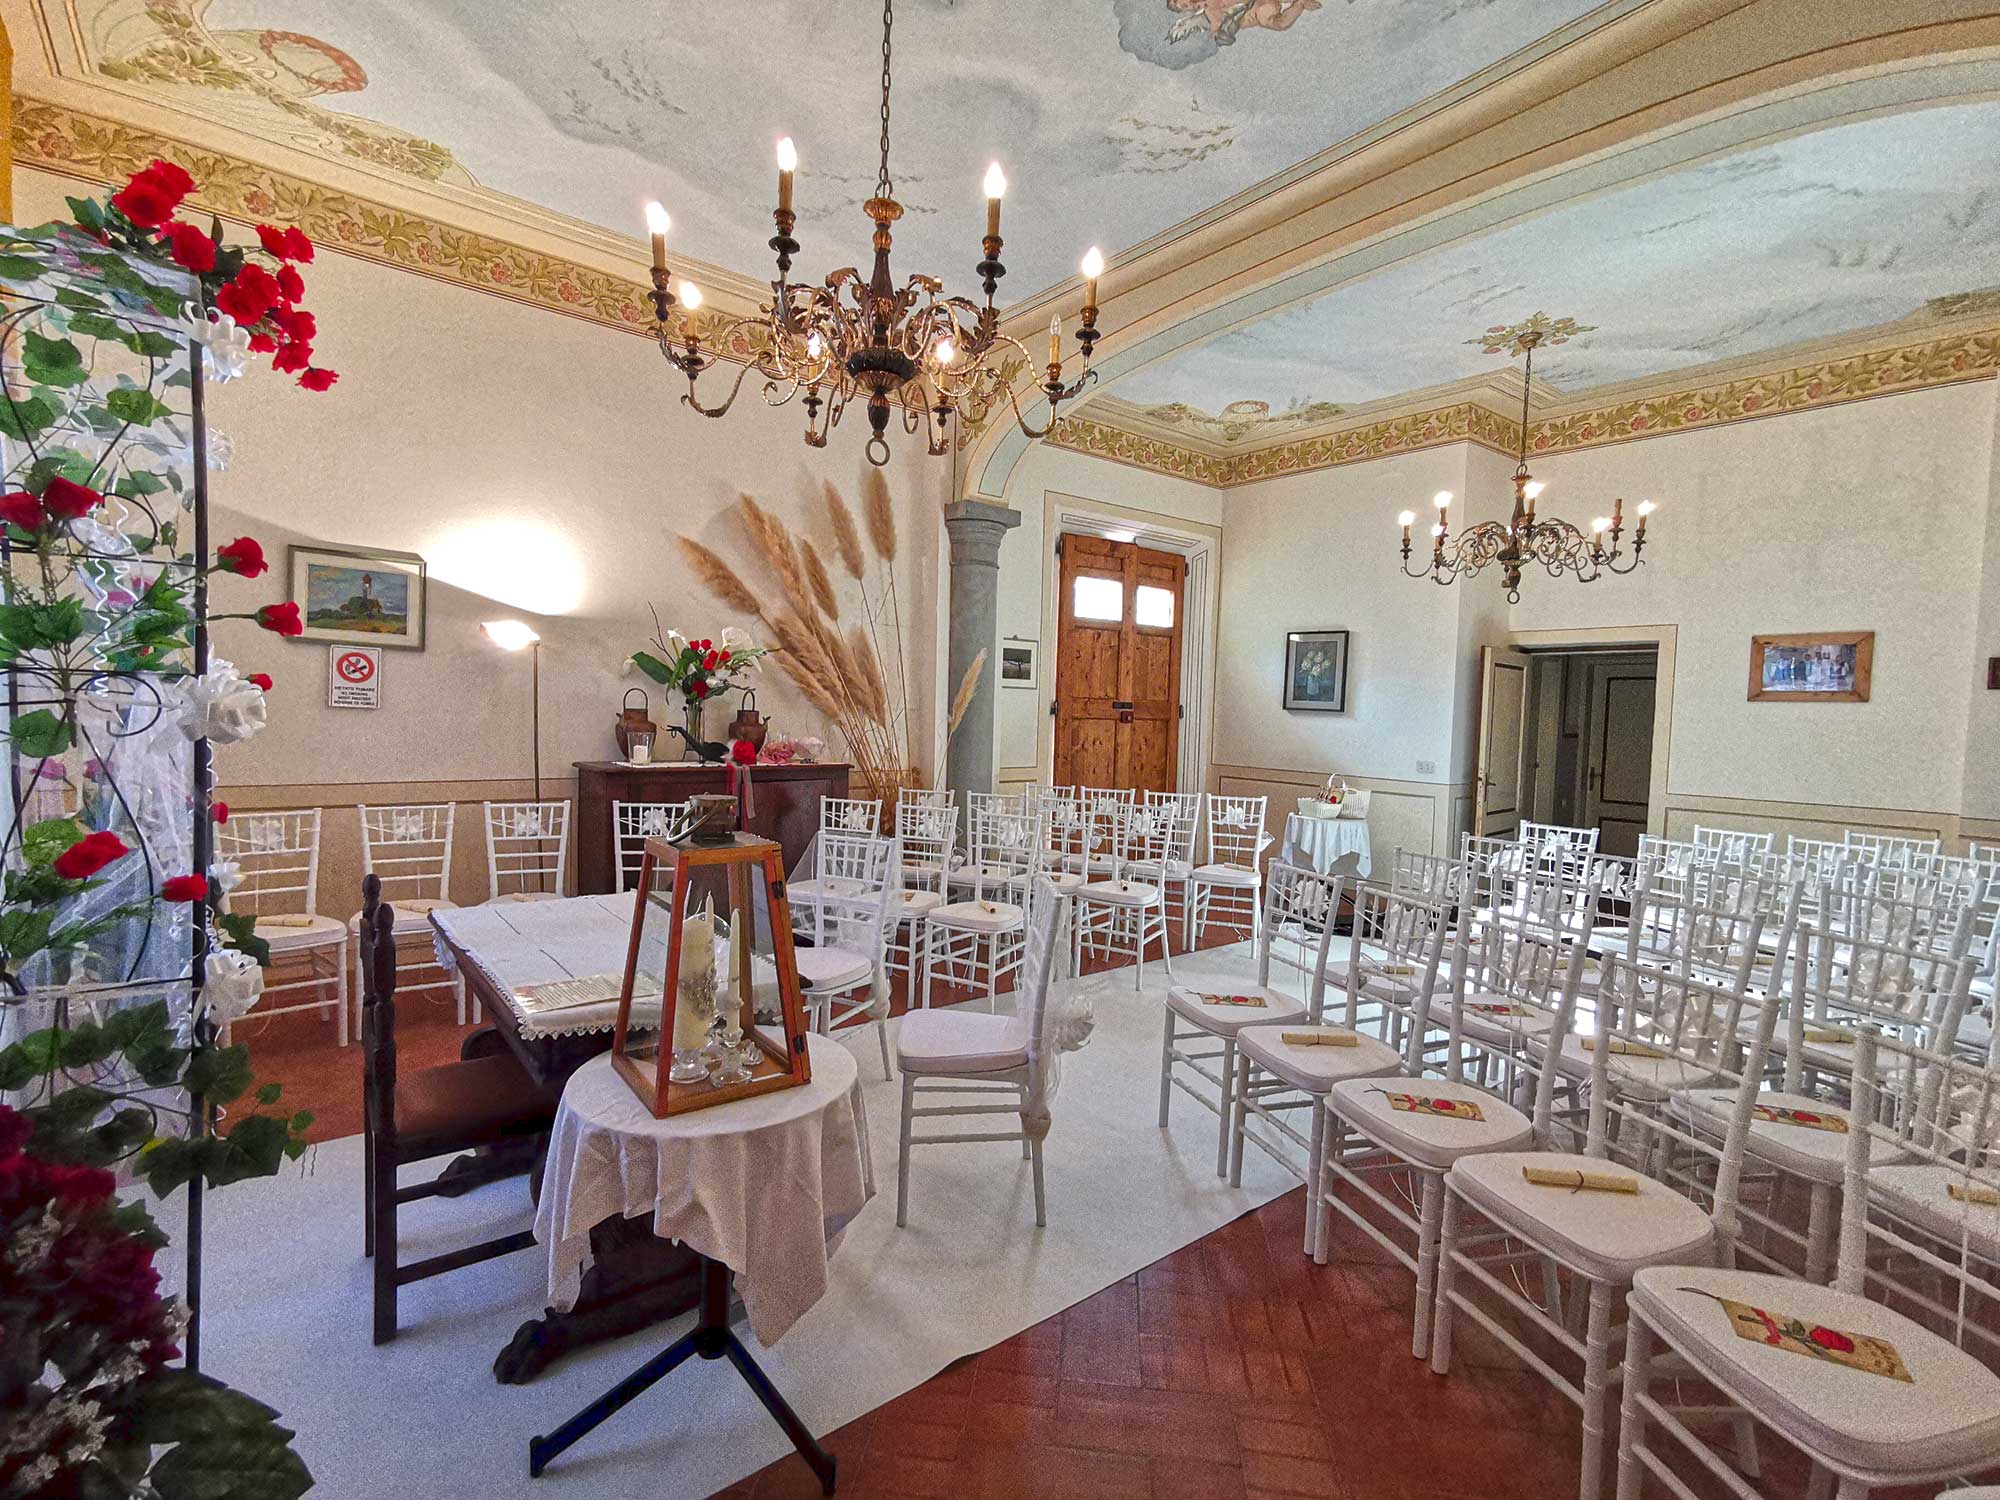 Villa Cerreto. Ideal location for your wedding